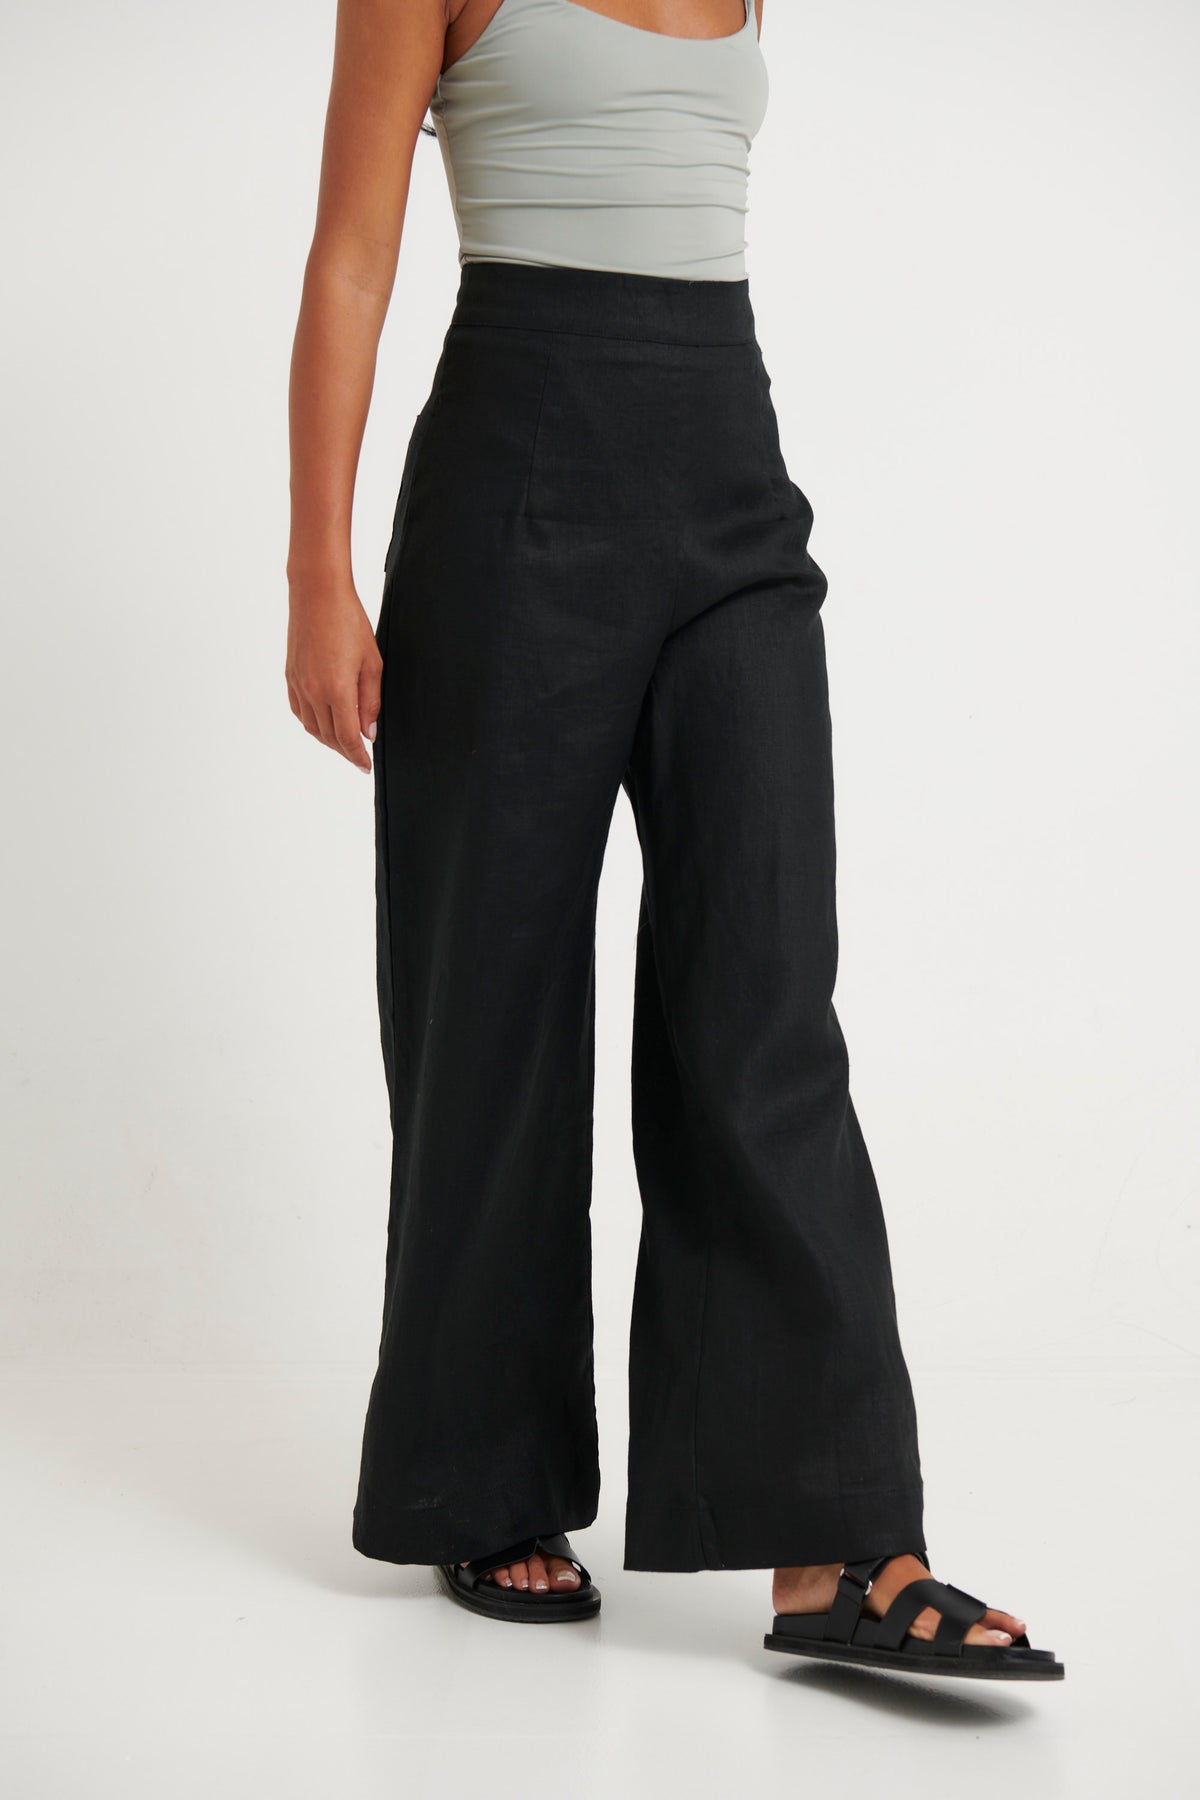 Wrenley Linen Pant Black - FINAL SALE